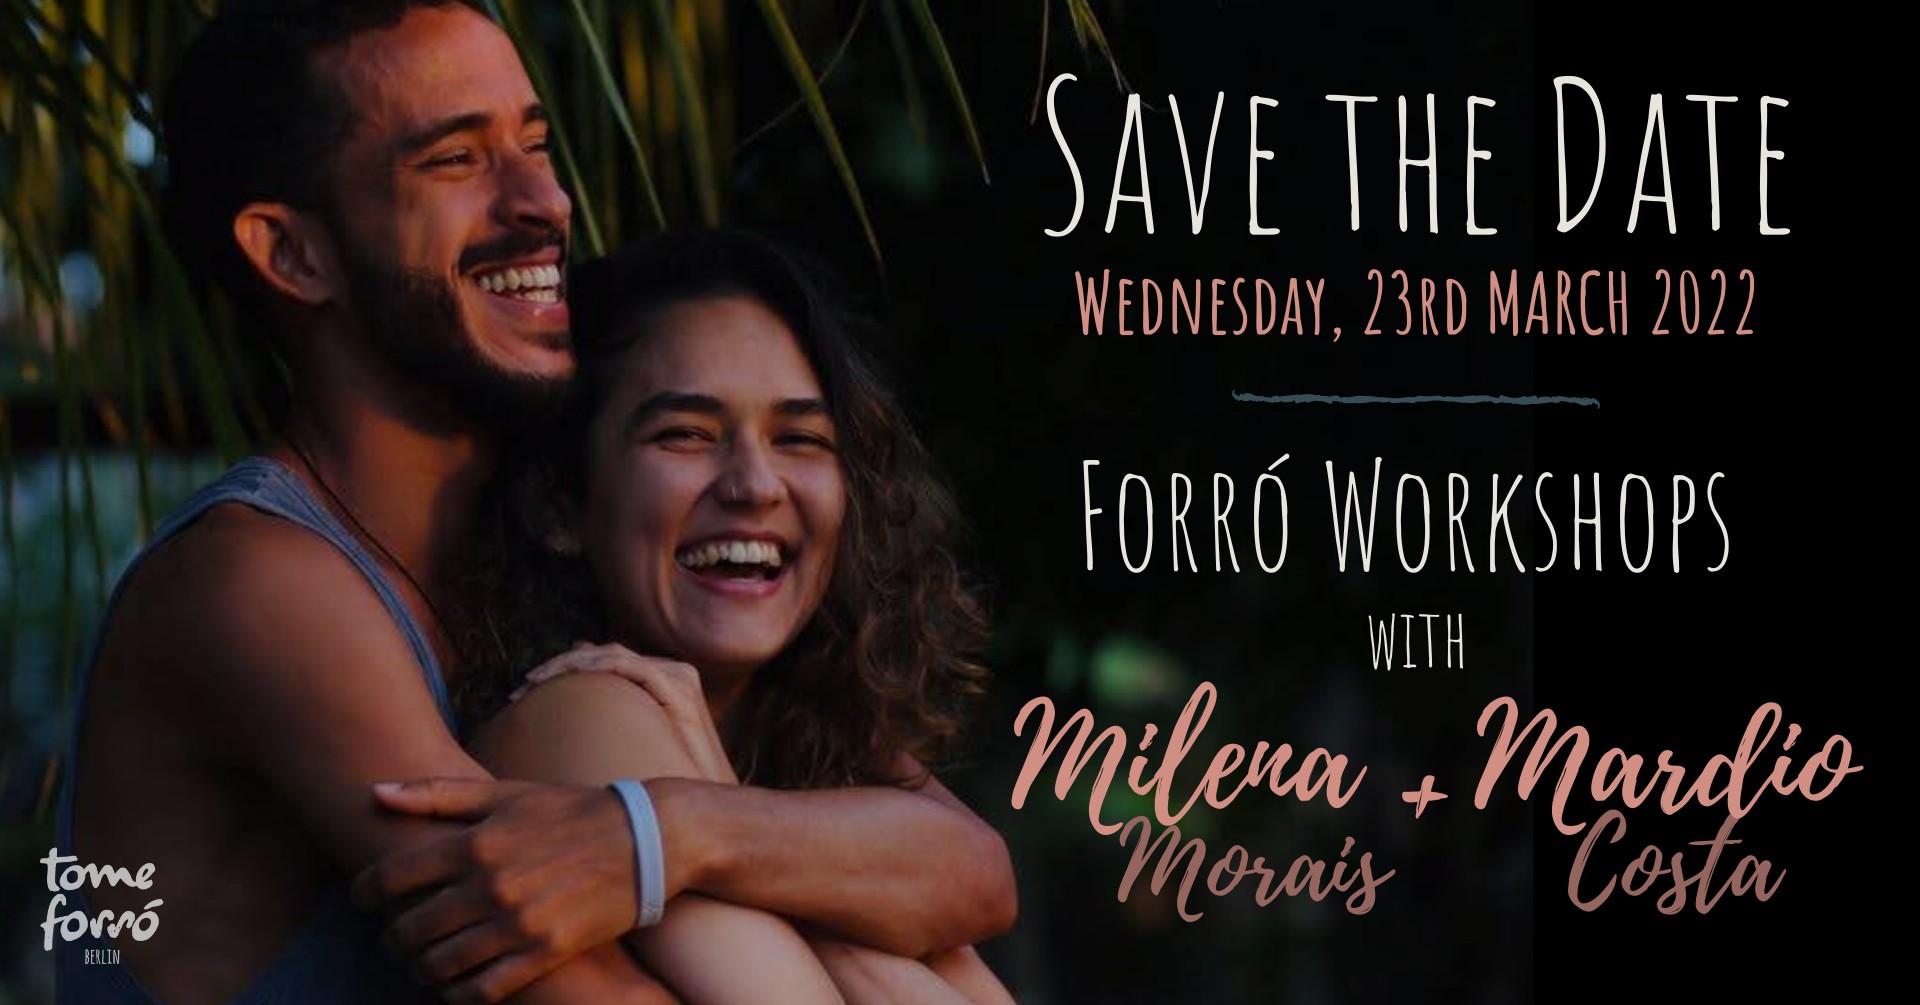 Forró Workshops with Milena Morais & Mardio Costa